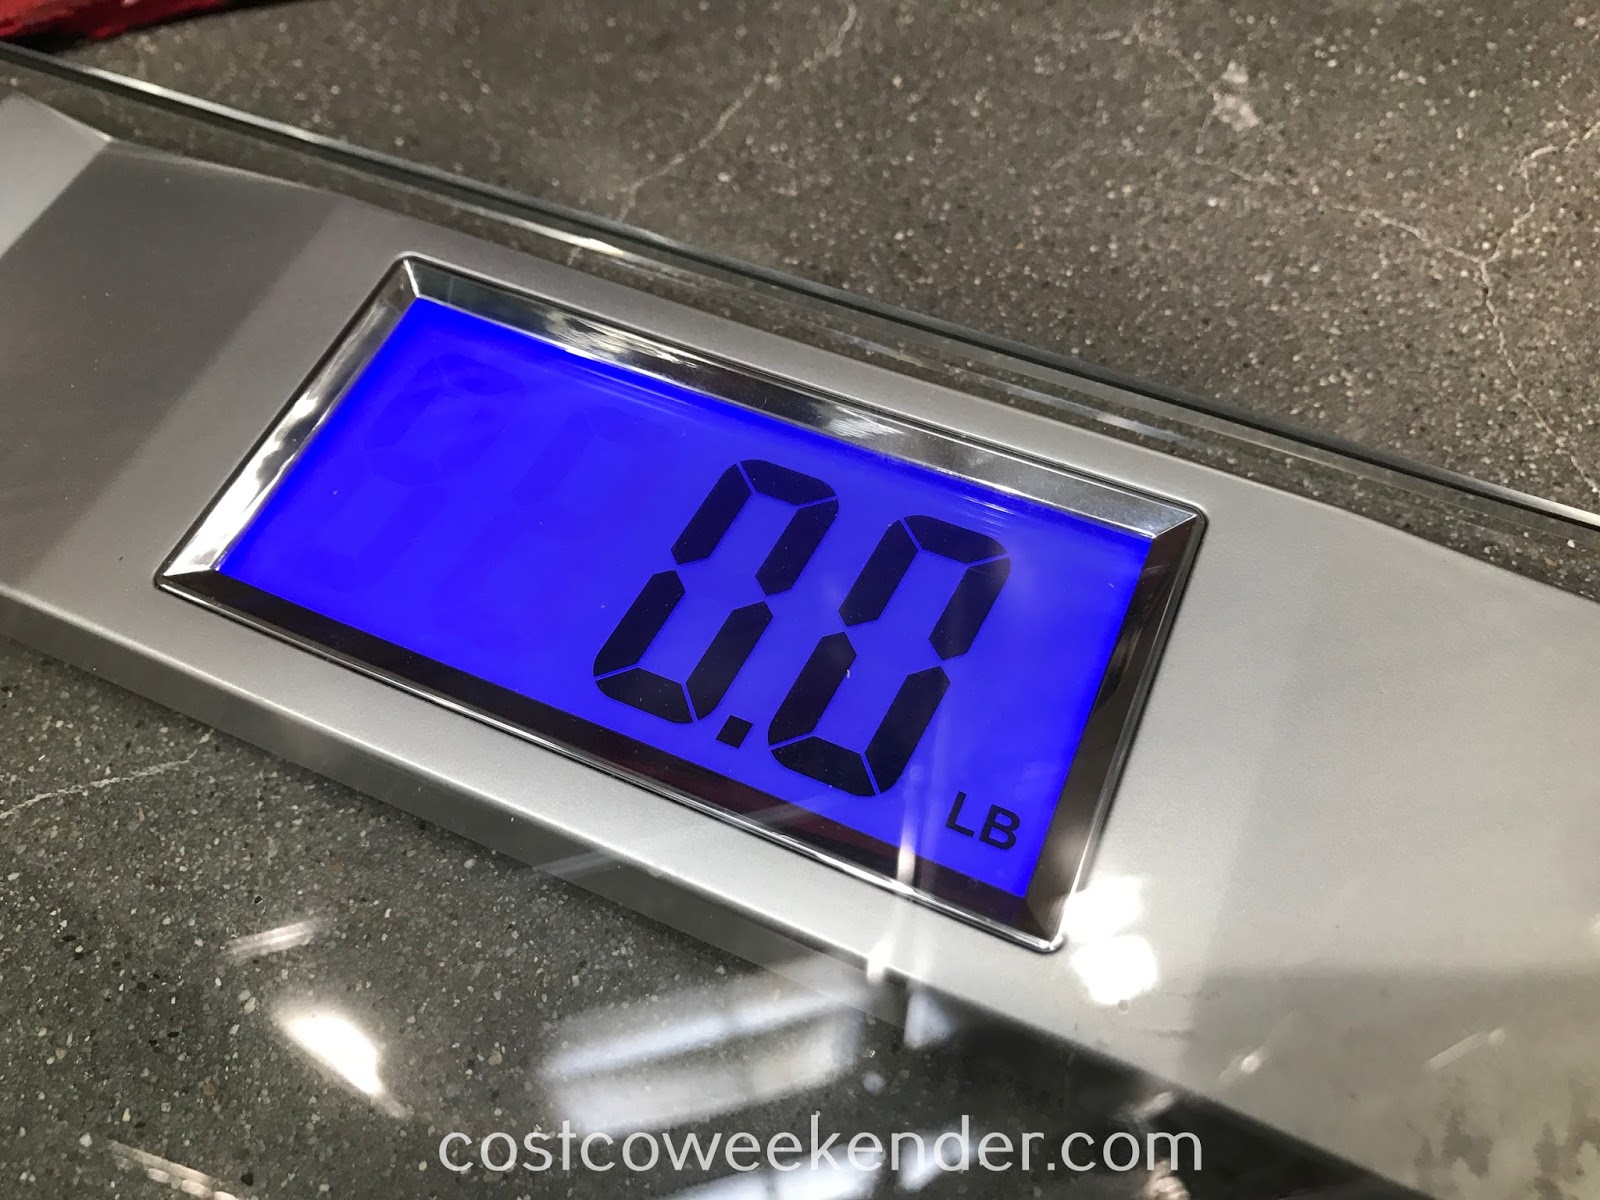 Weight Watchers Digital Glass Scale | Costco Weekender